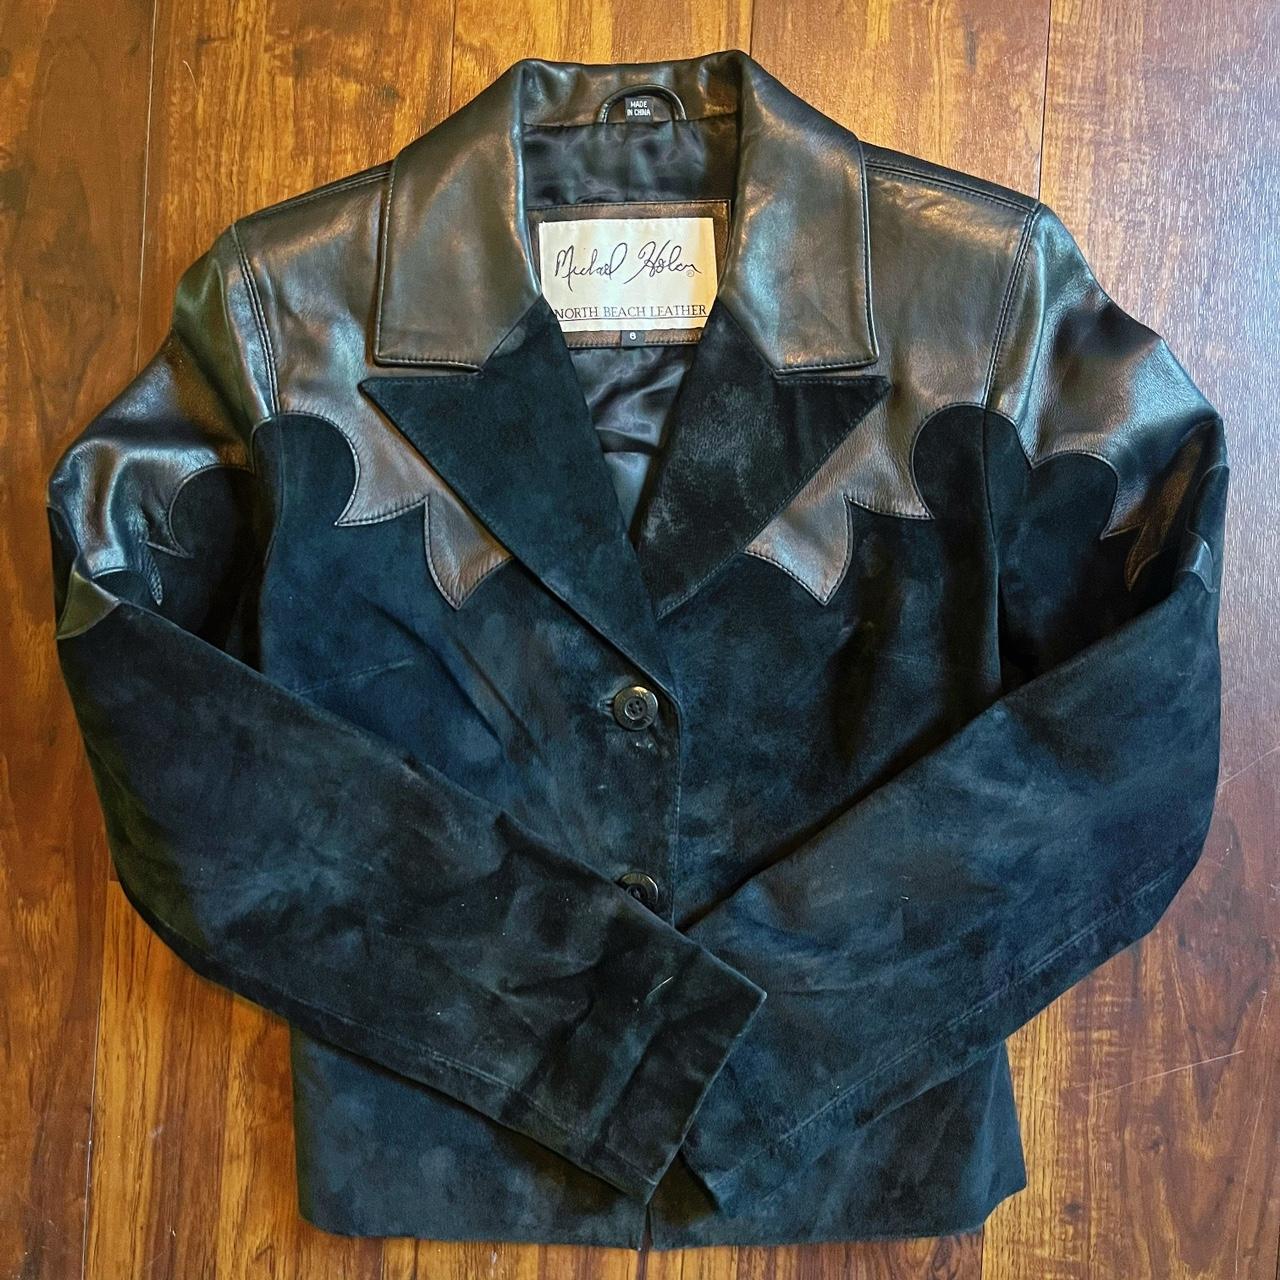 Gorgeous Vintage 1980’s North Beach Leather Michael